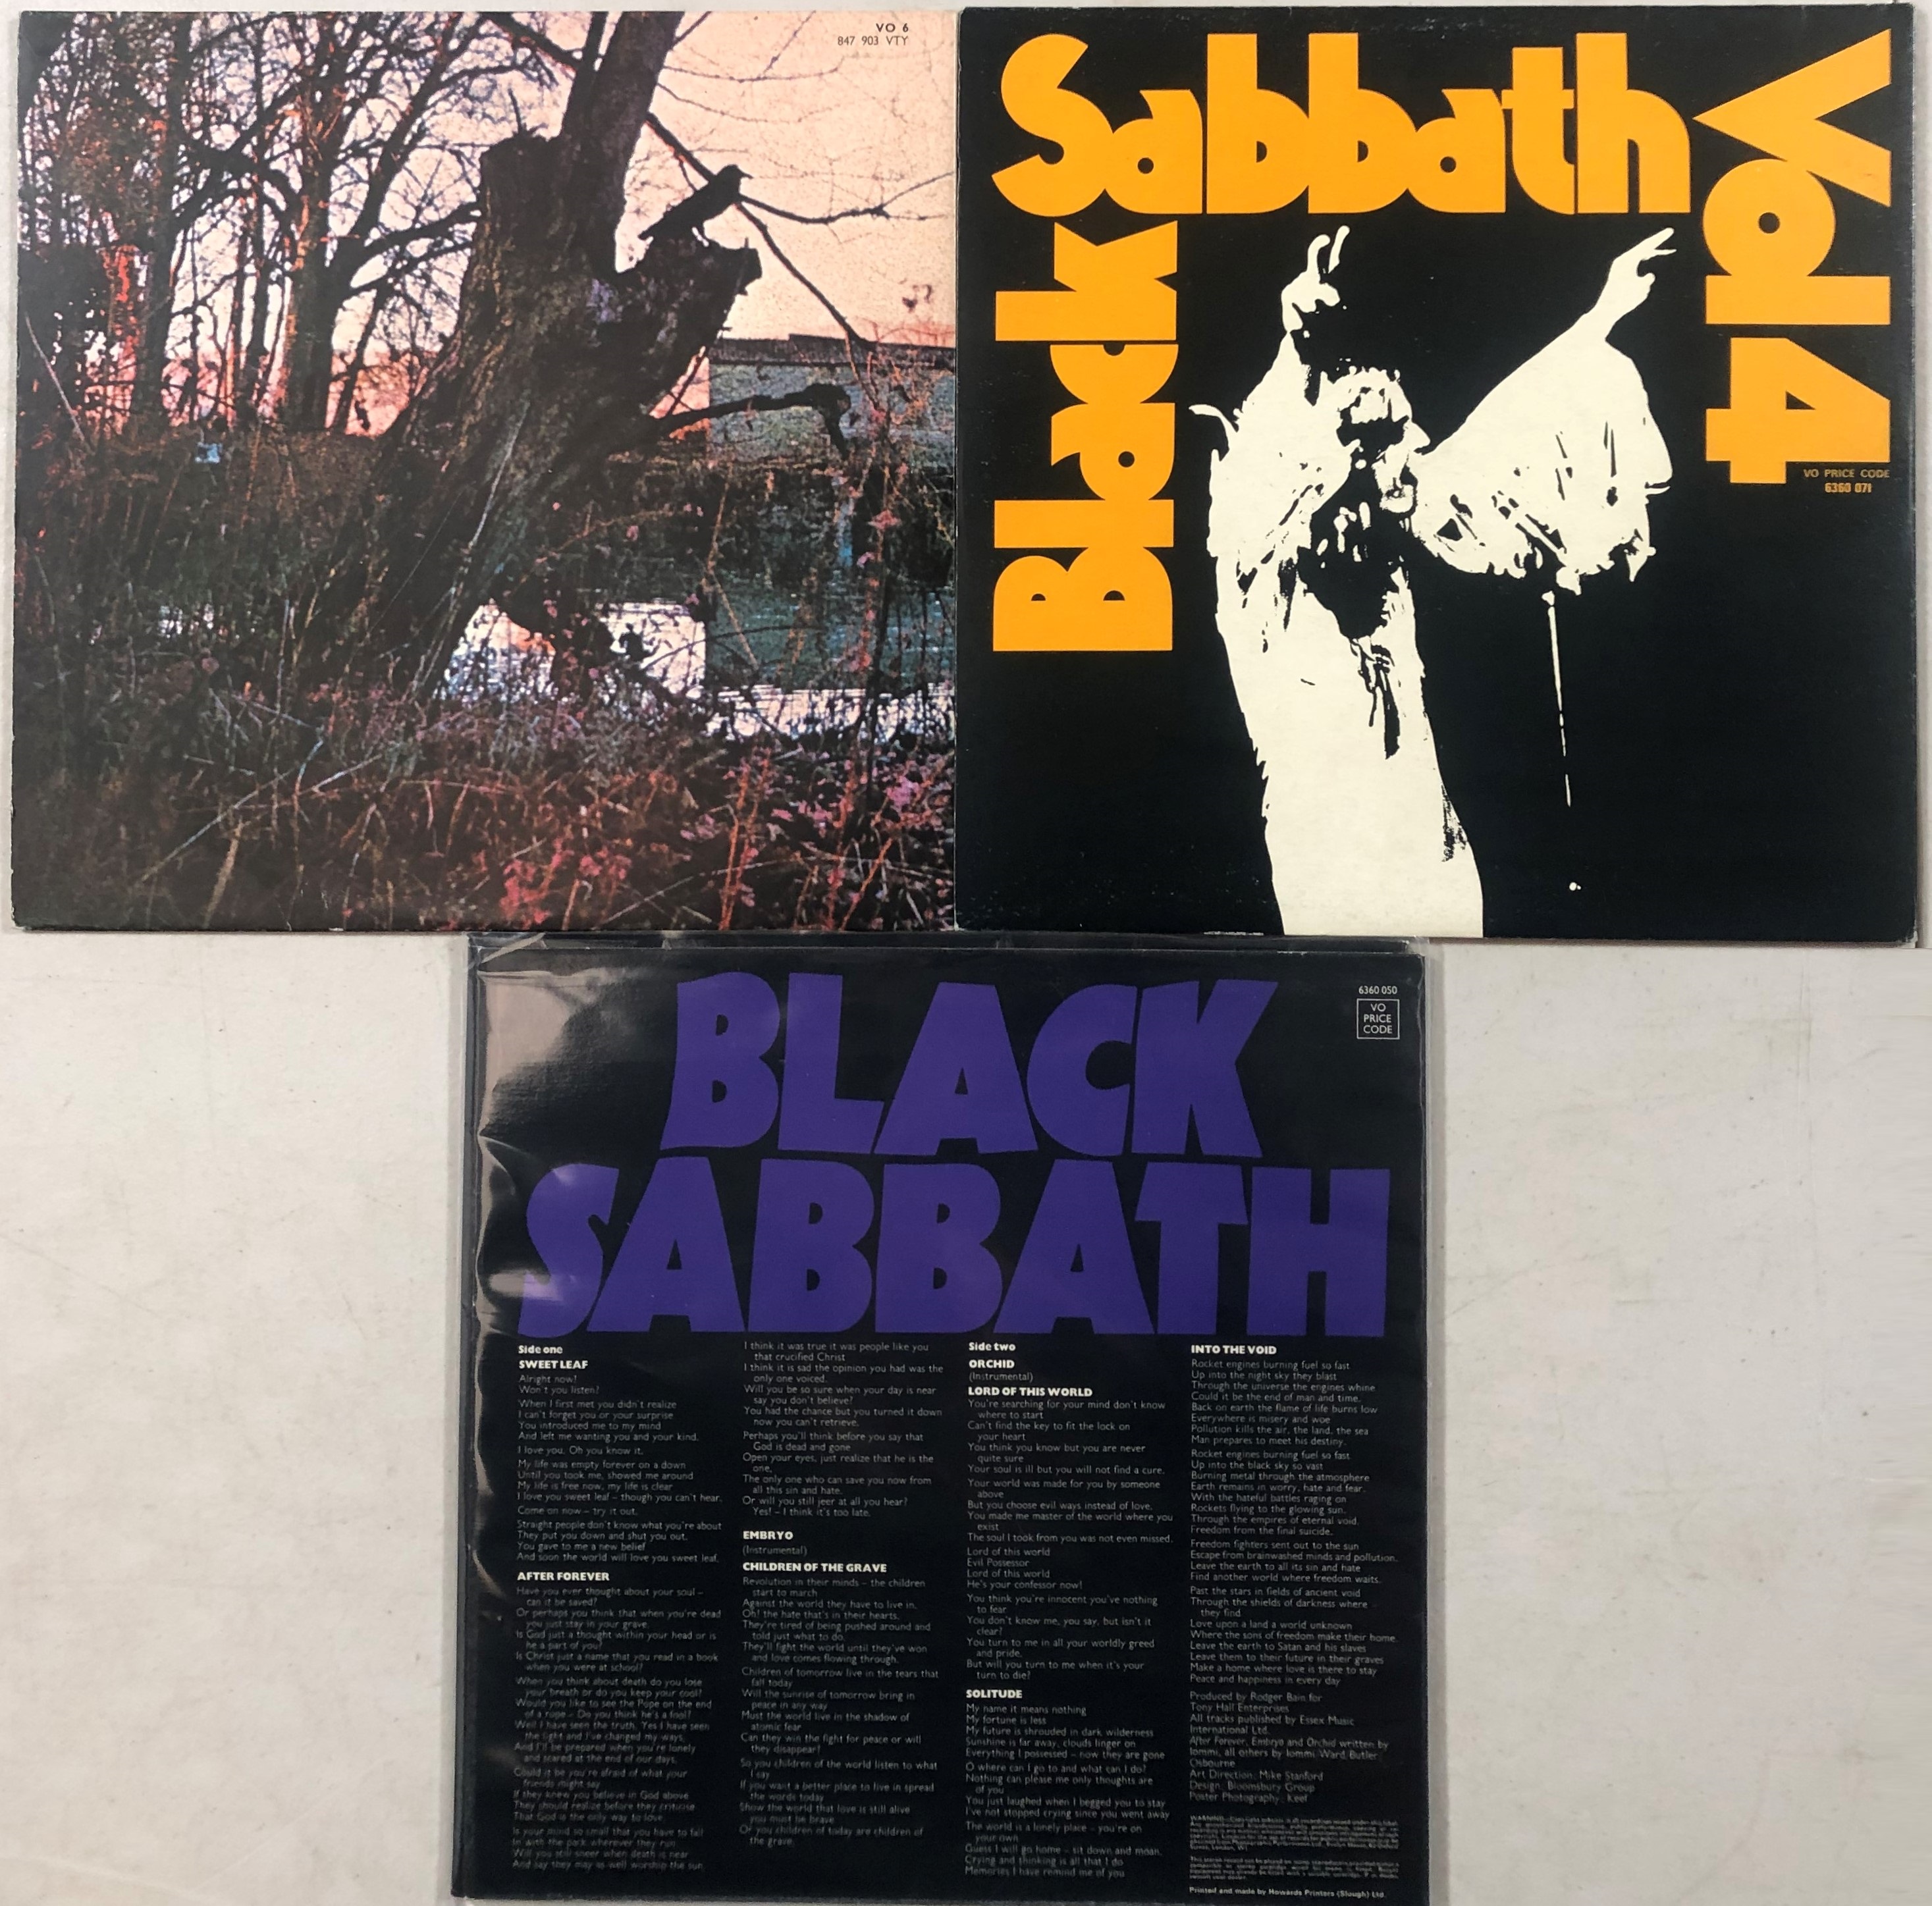 BLACK SABBATH - UK VERTIGO SWIRL LPs. - Image 2 of 3